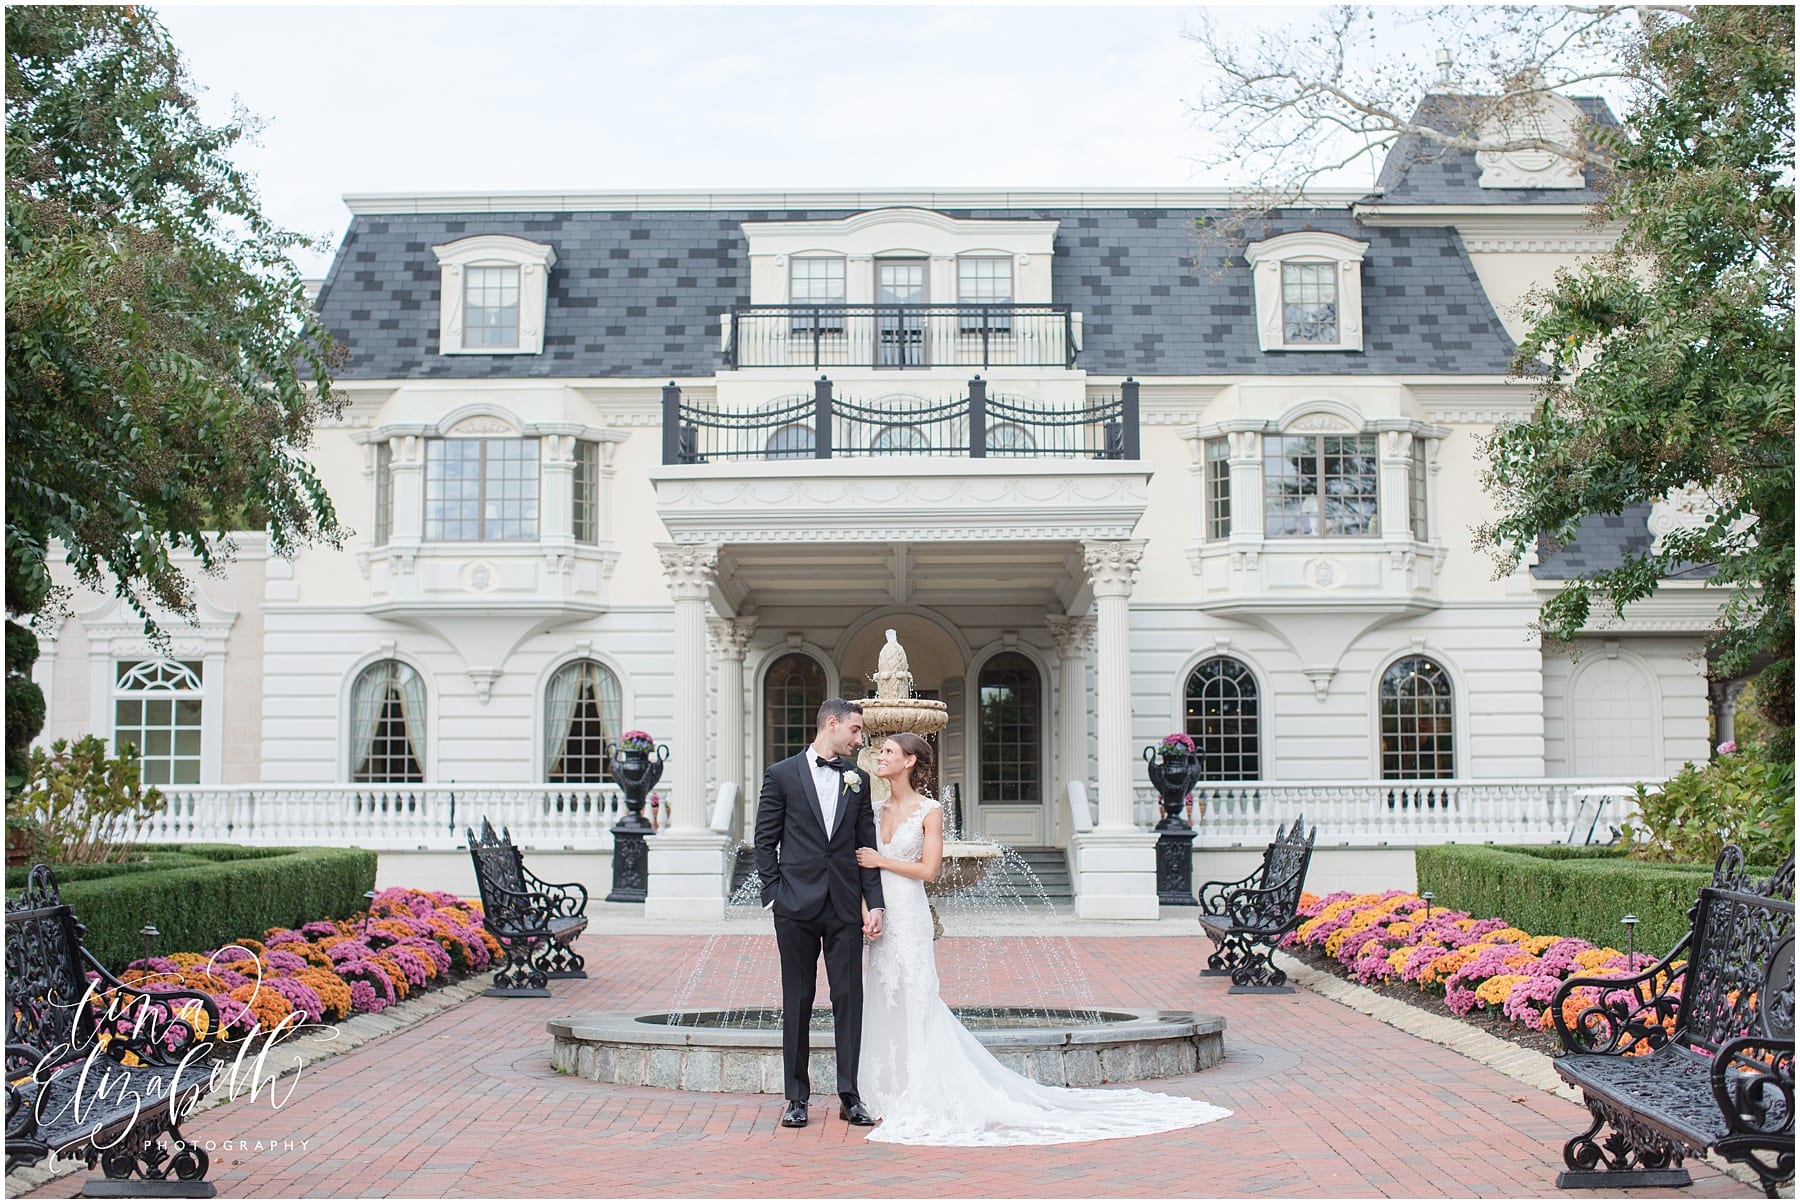 The Ashford Estate Wedding Photos by Tina Elizabeth Photography